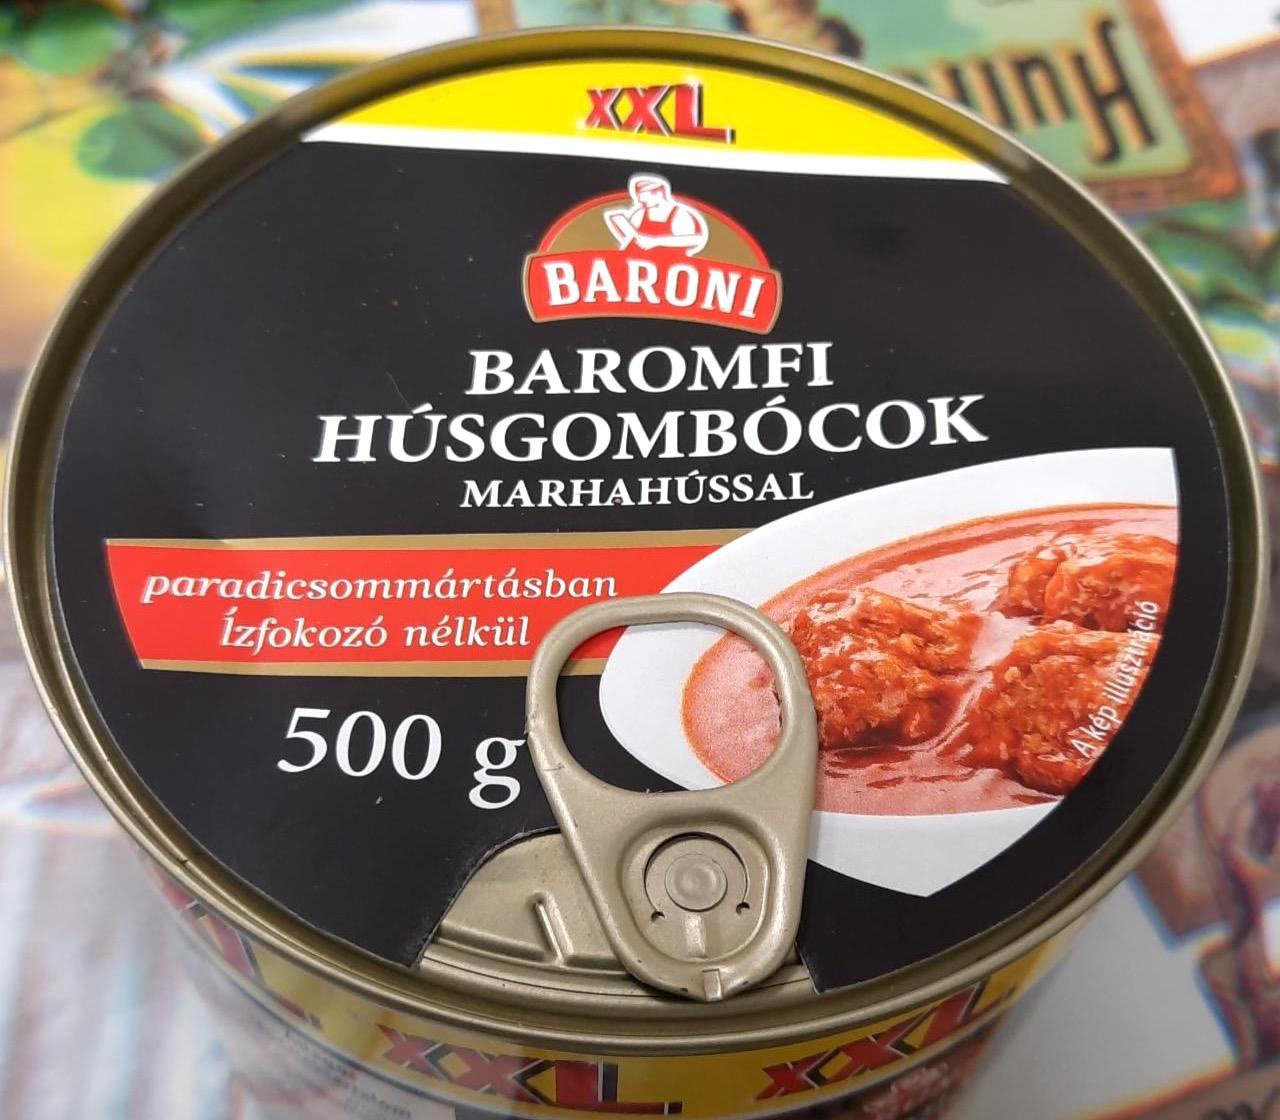 Képek - Baromfi húsgombócok marhahússal Baroni